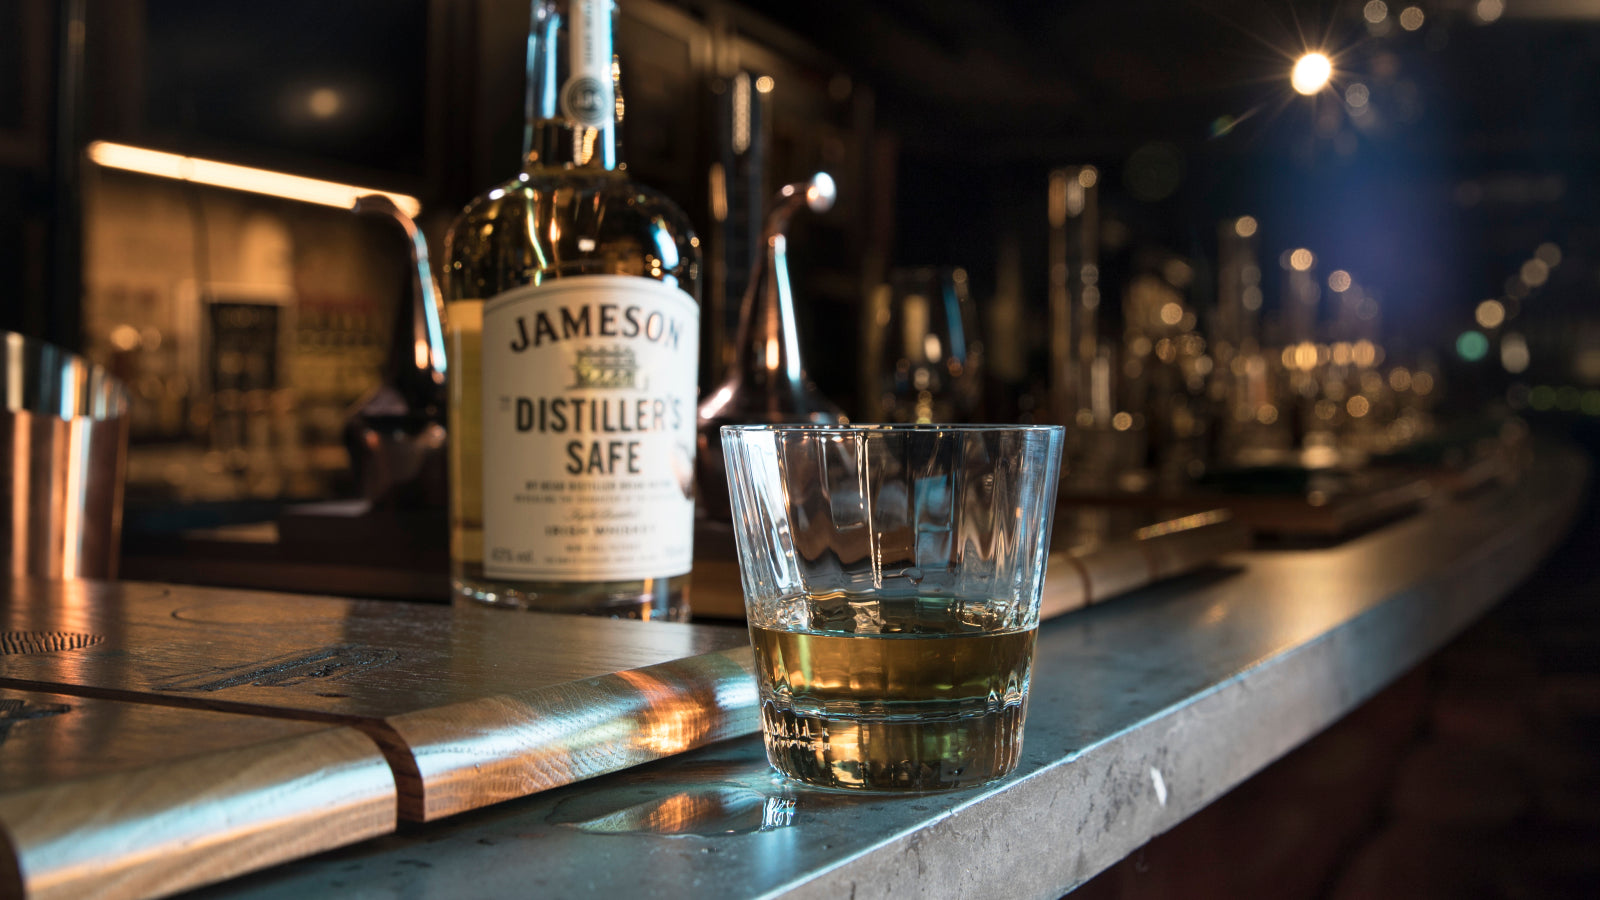 Jameson Whiskey Distiller's Safe 70cl